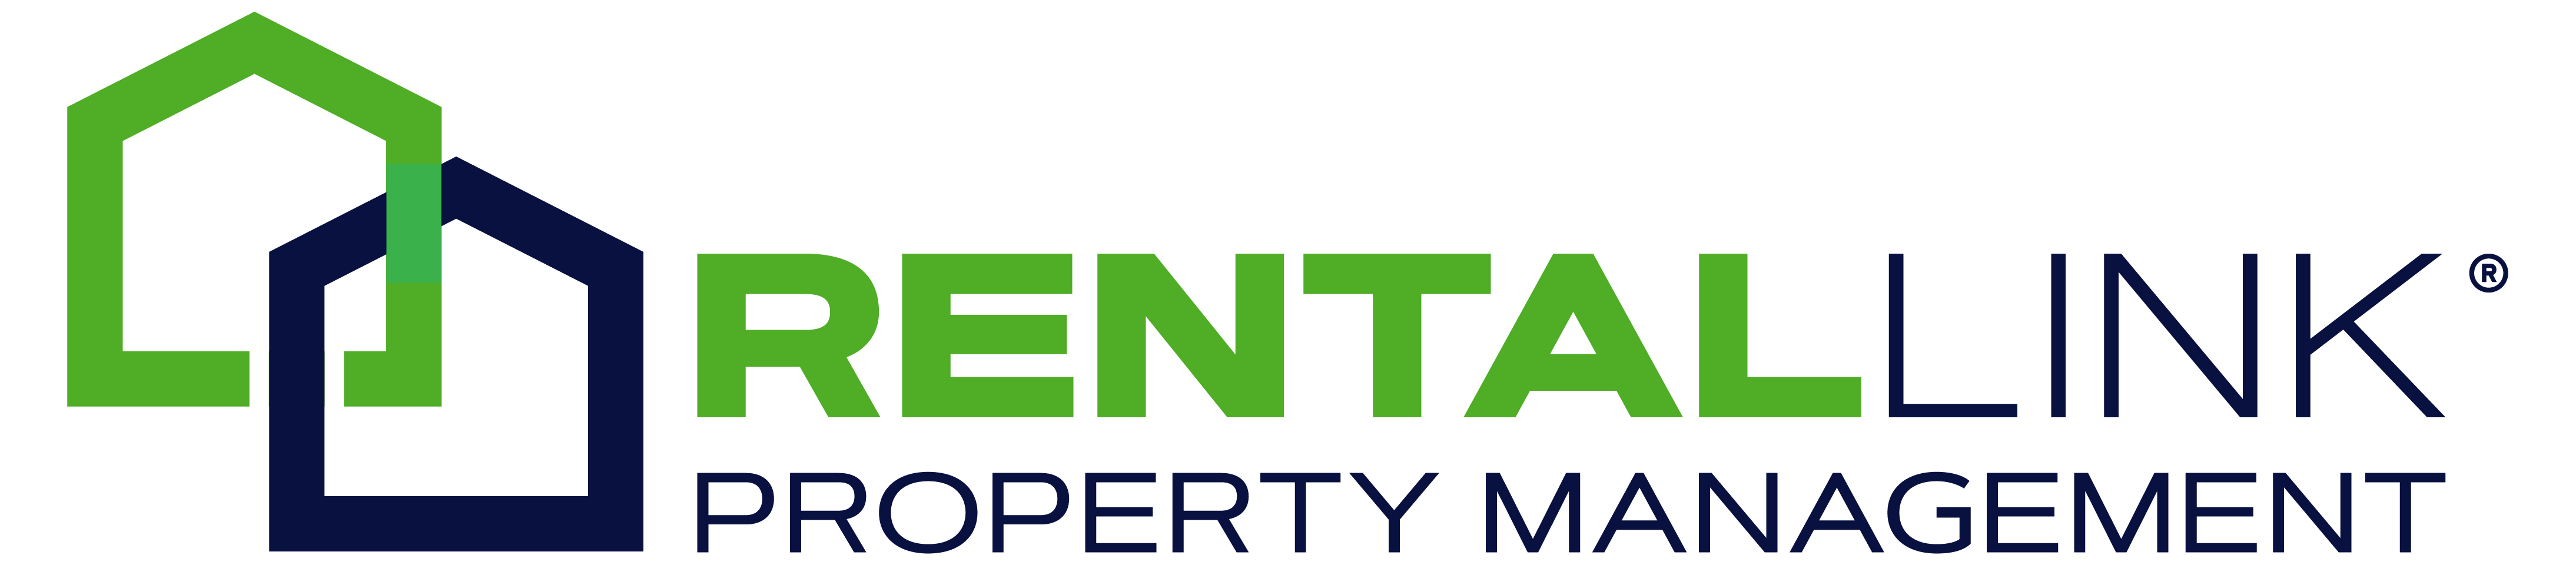 Rental Link, LLC logo